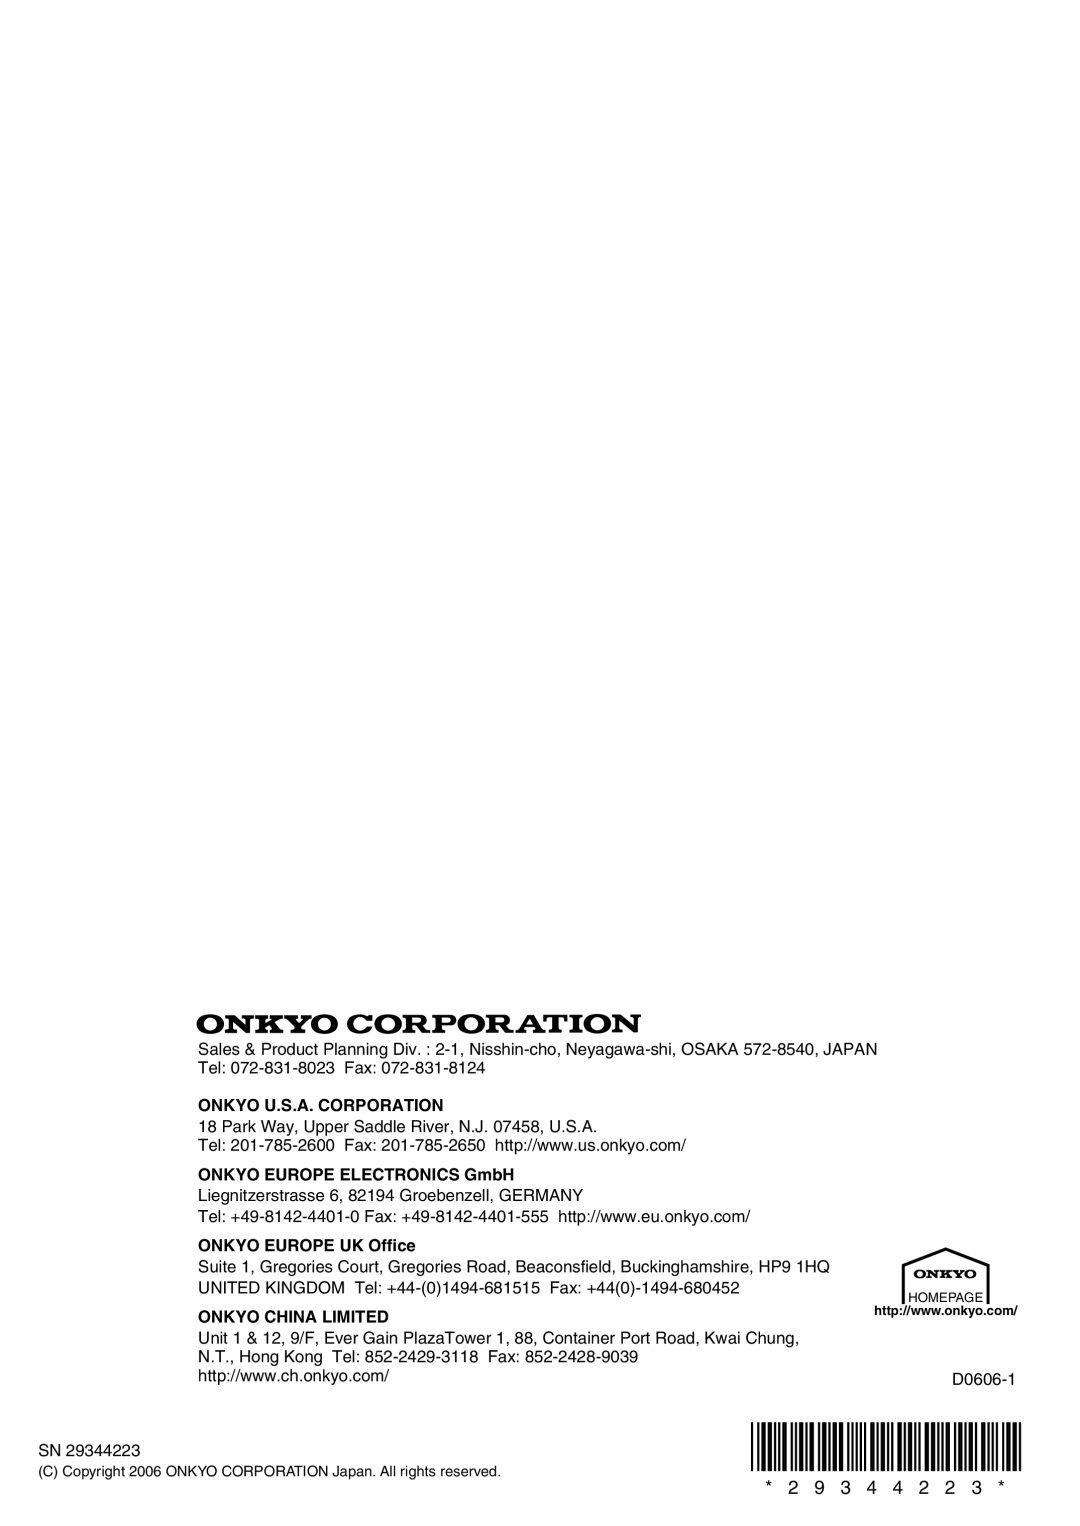 Onkyo TX-SR604/604E Onkyo U.S.A. Corporation, ONKYO EUROPE ELECTRONICS GmbH, ONKYO EUROPE UK Office, Onkyo China Limited 